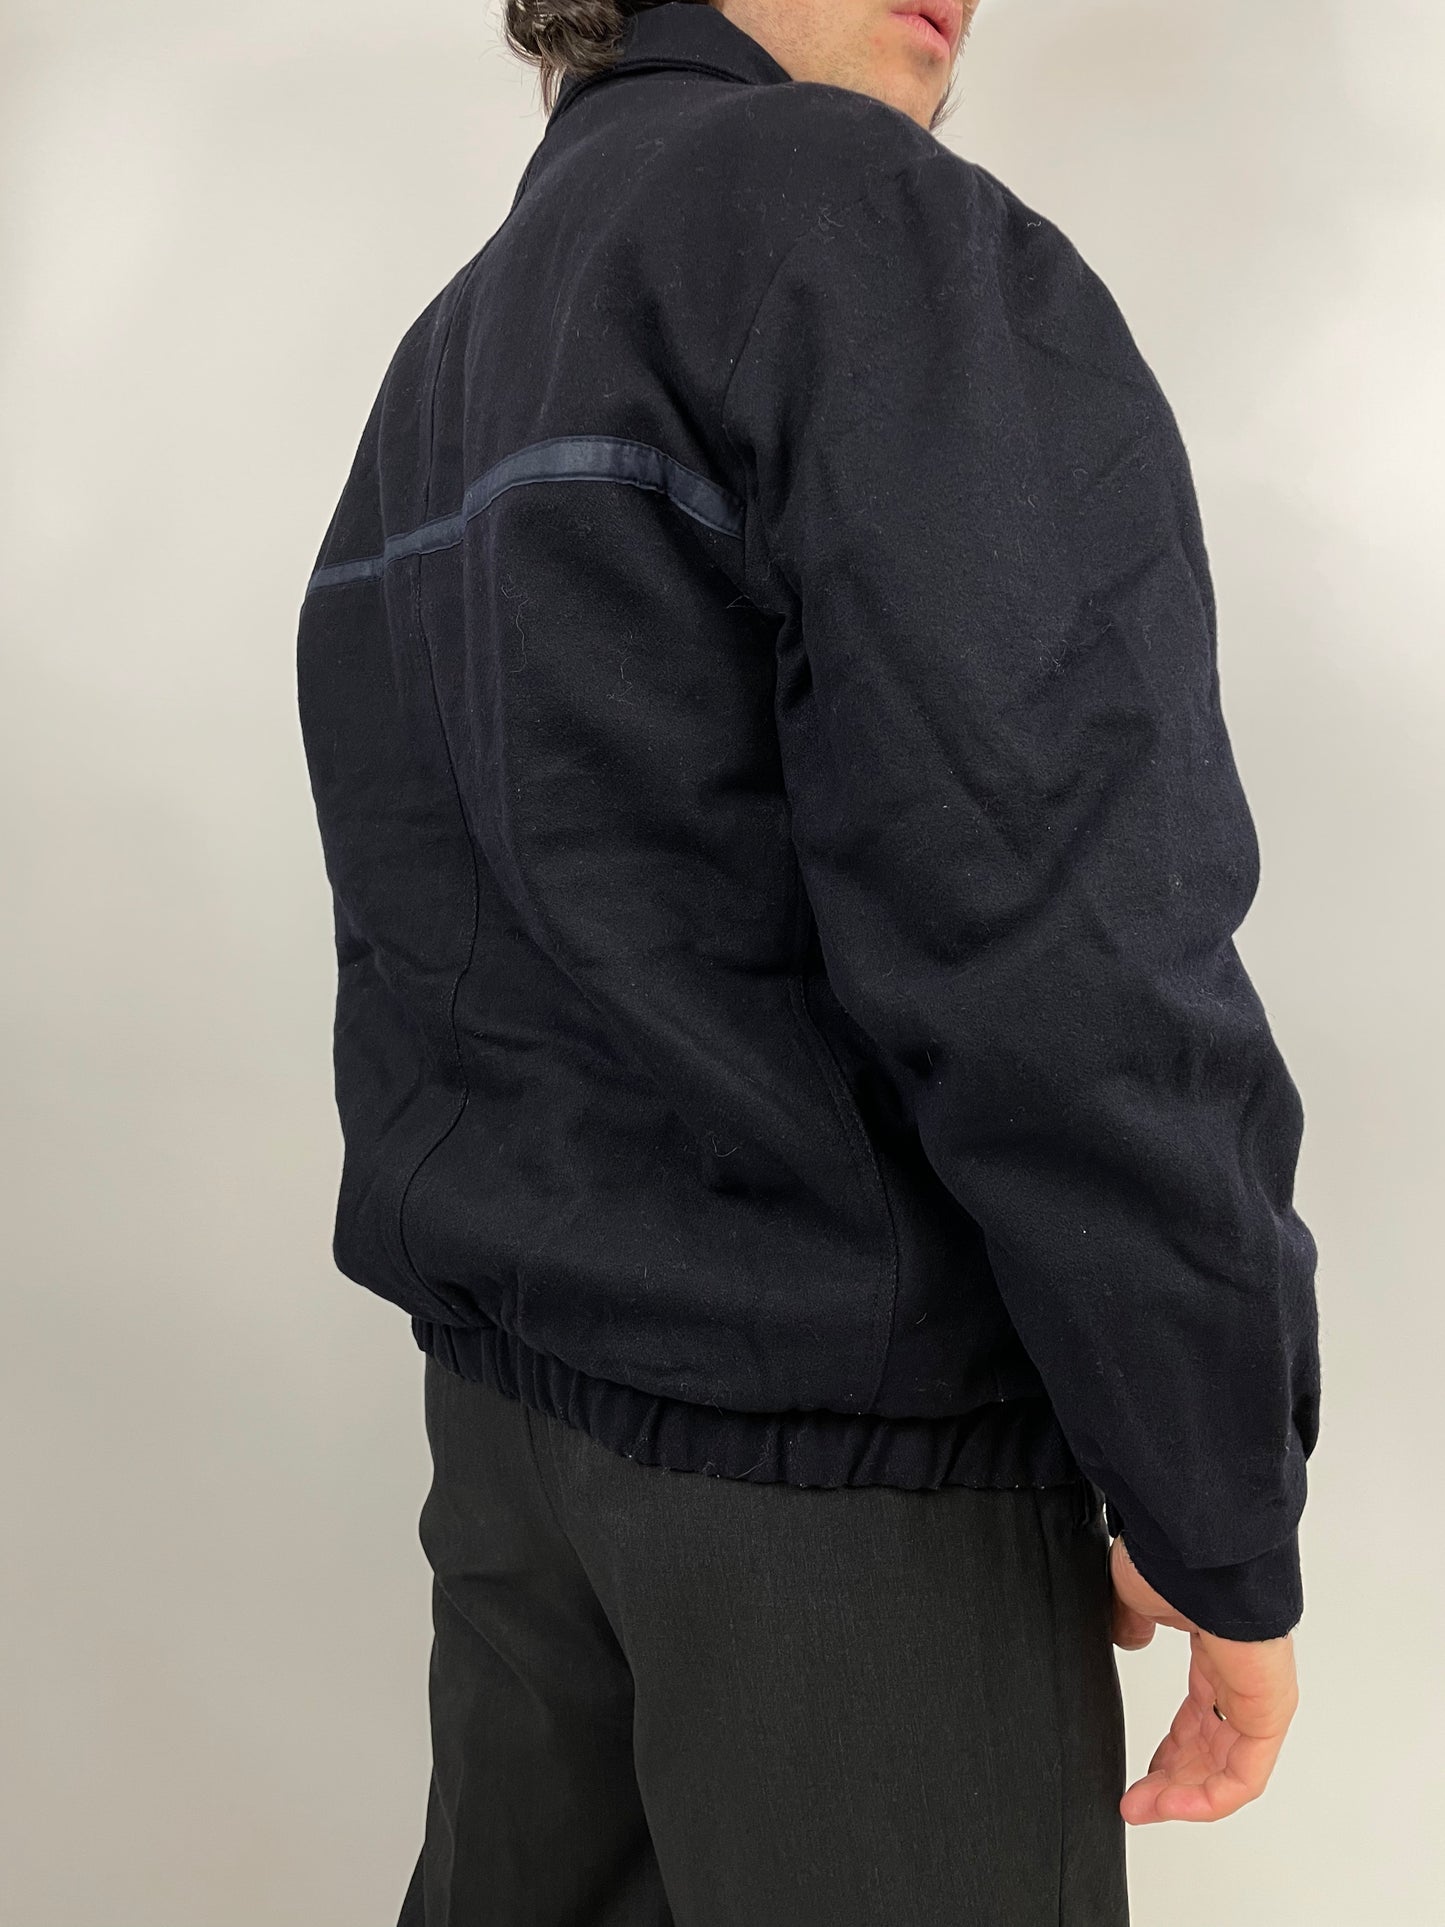 Little Max 1990s jacket